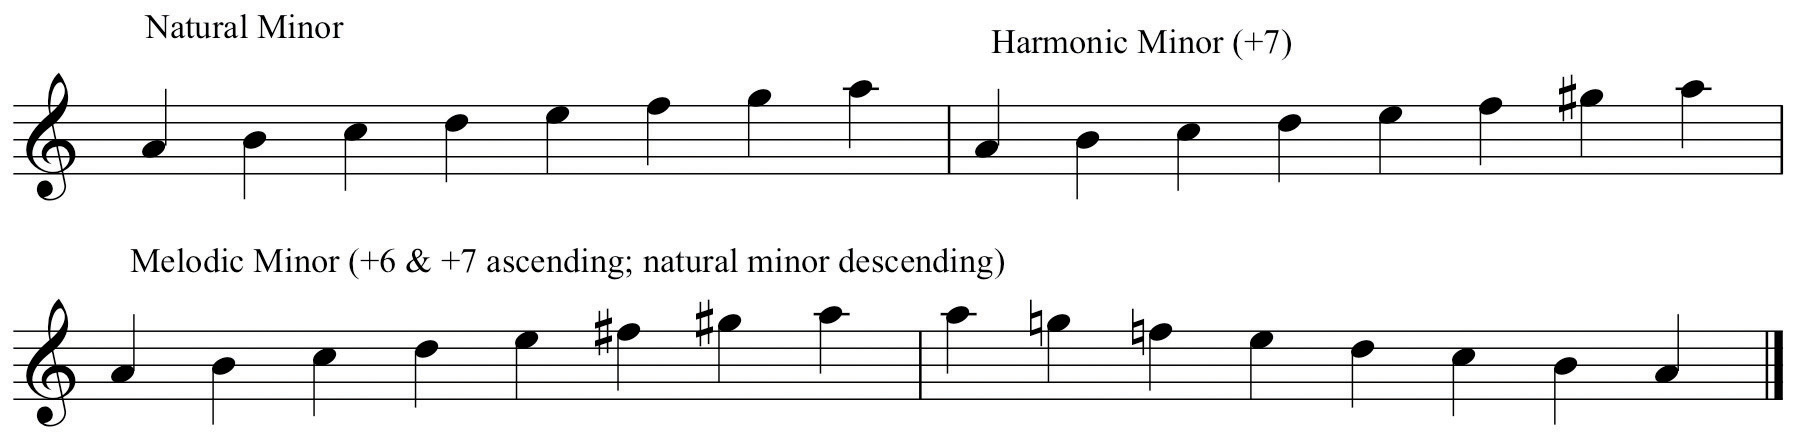 g flat sharp major scale bass clef